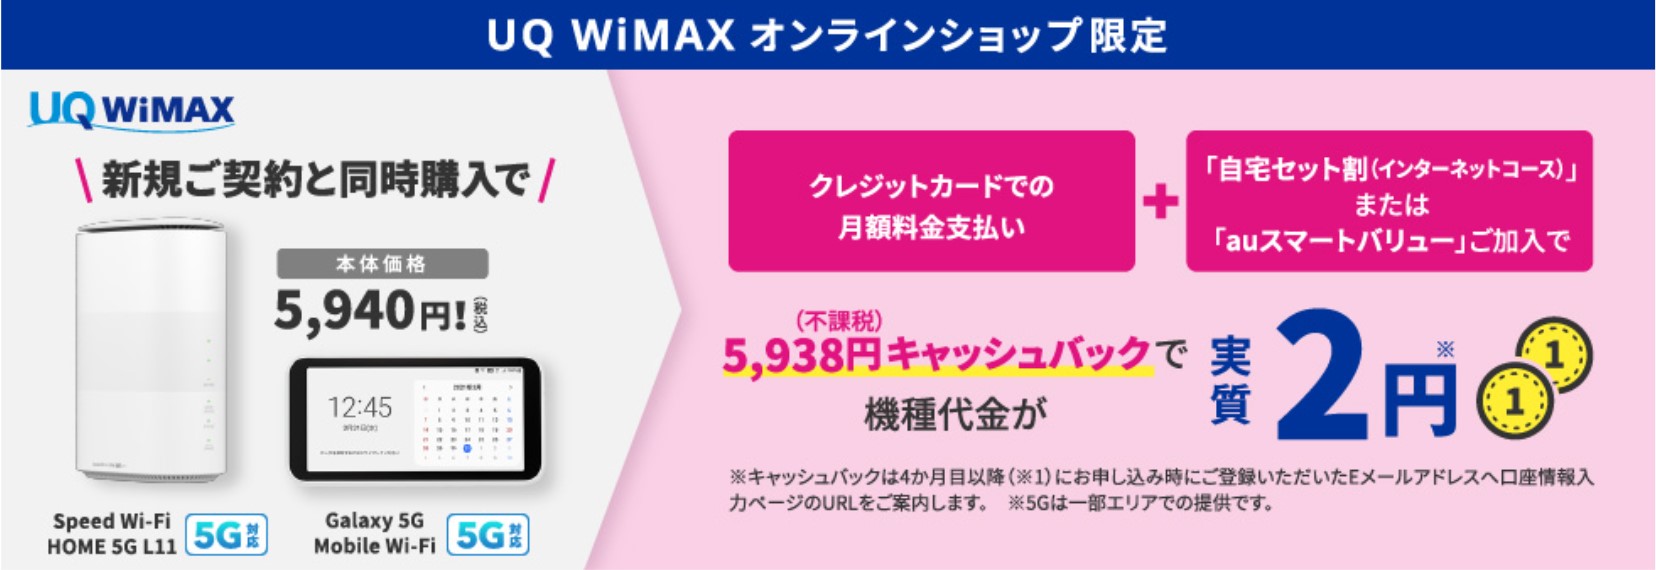 UQ WiMAX キャンペーン